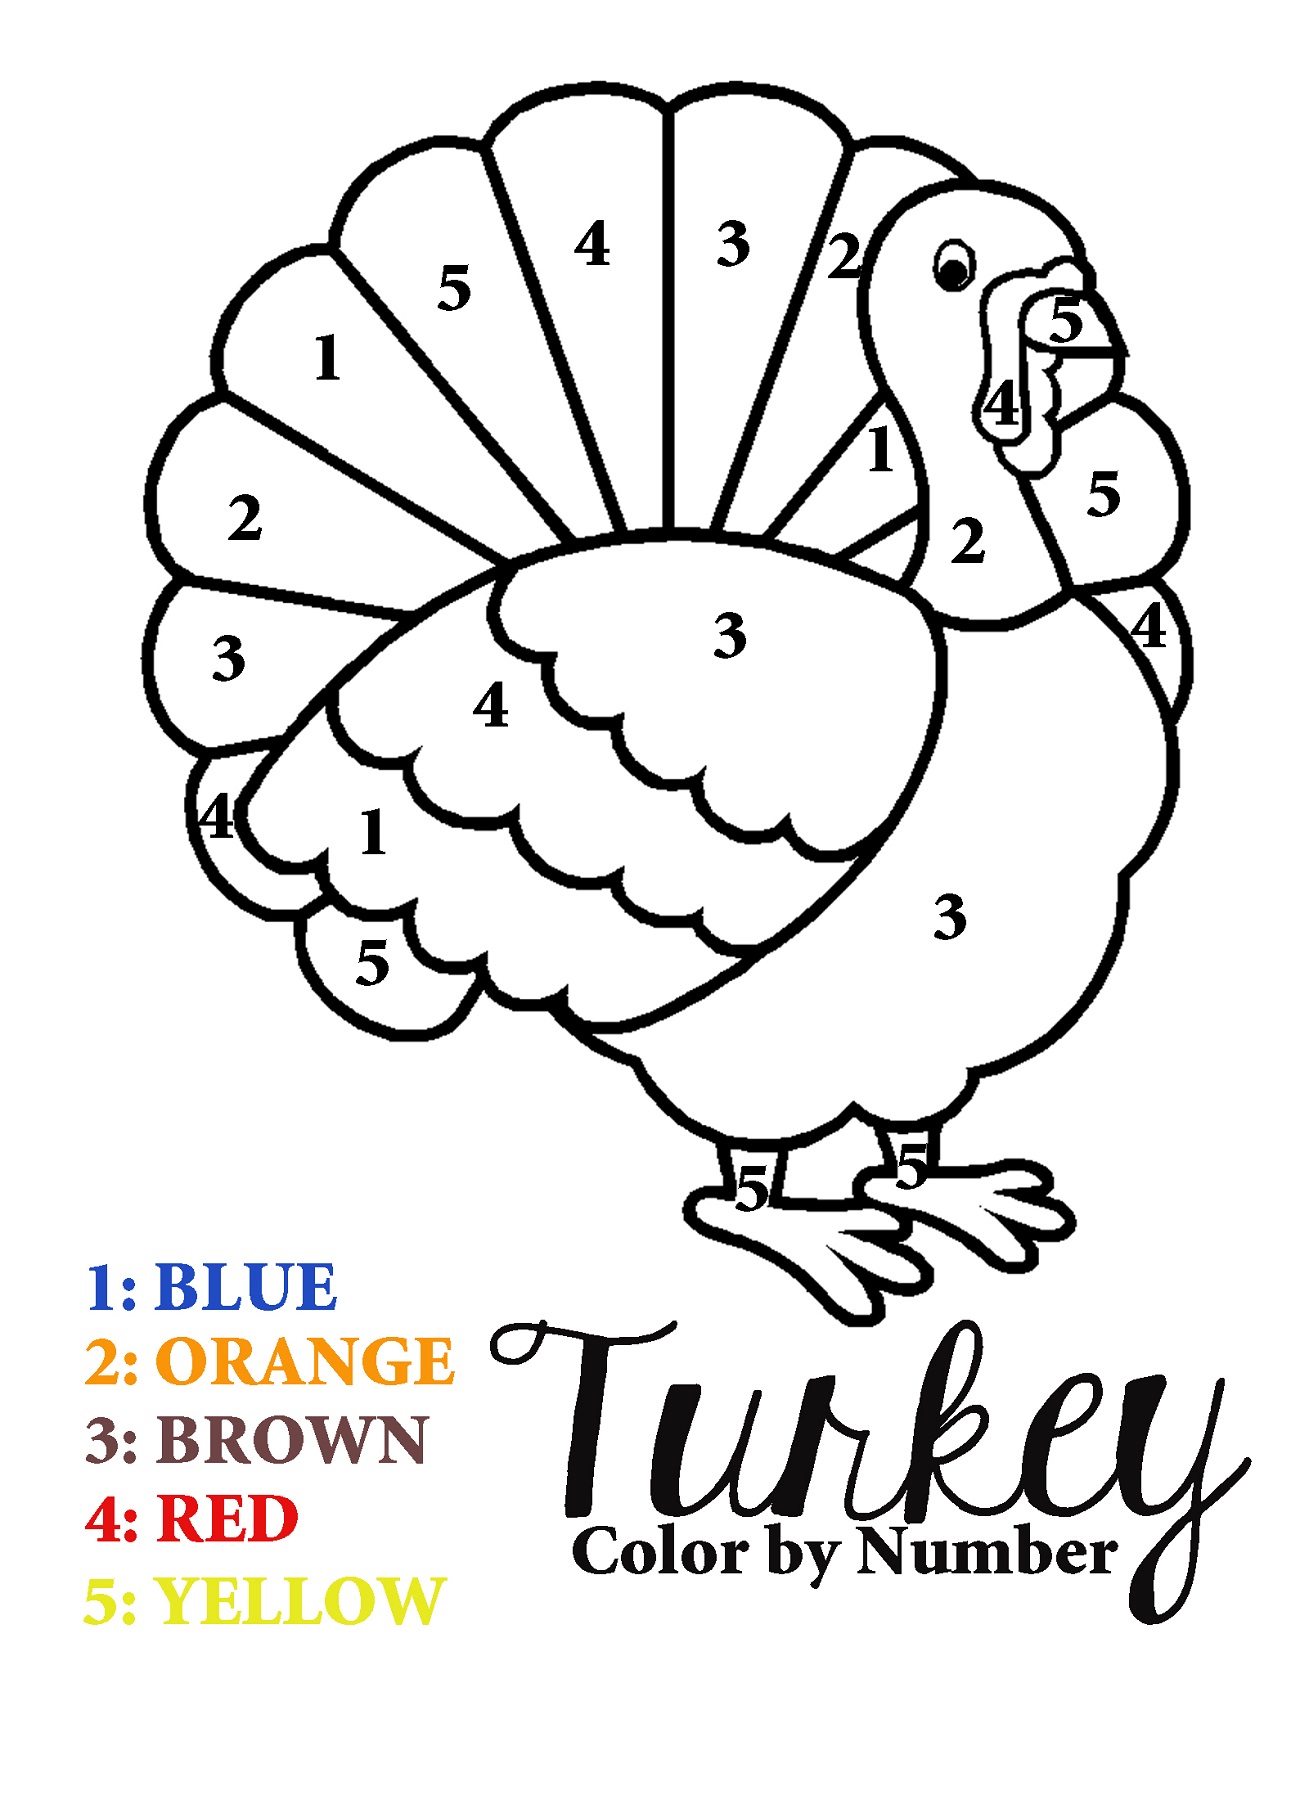 free-label-the-turkey-thanksgiving-worksheet-2-printable-versions